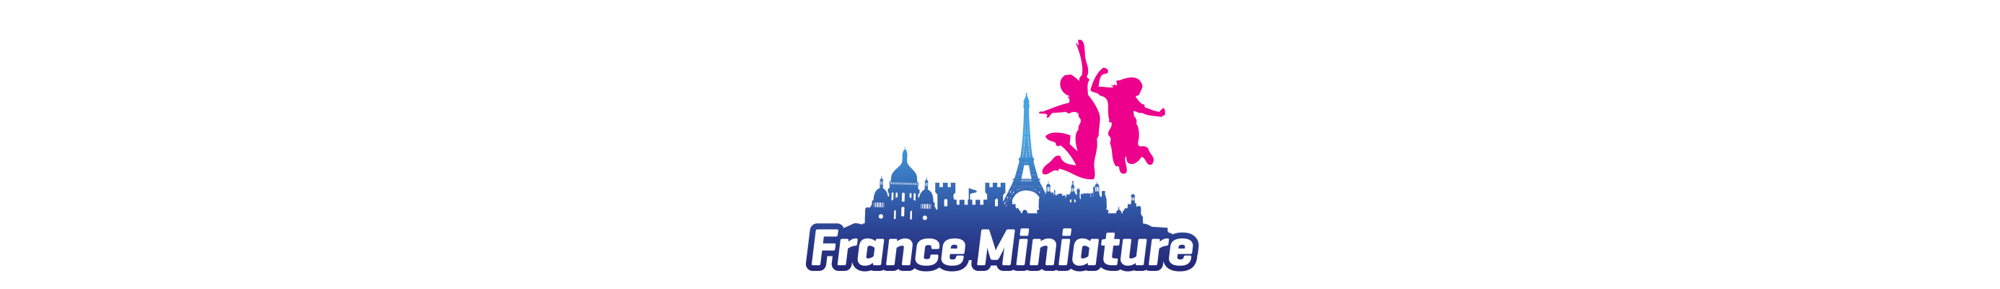 FRANCE MINIATURE logo